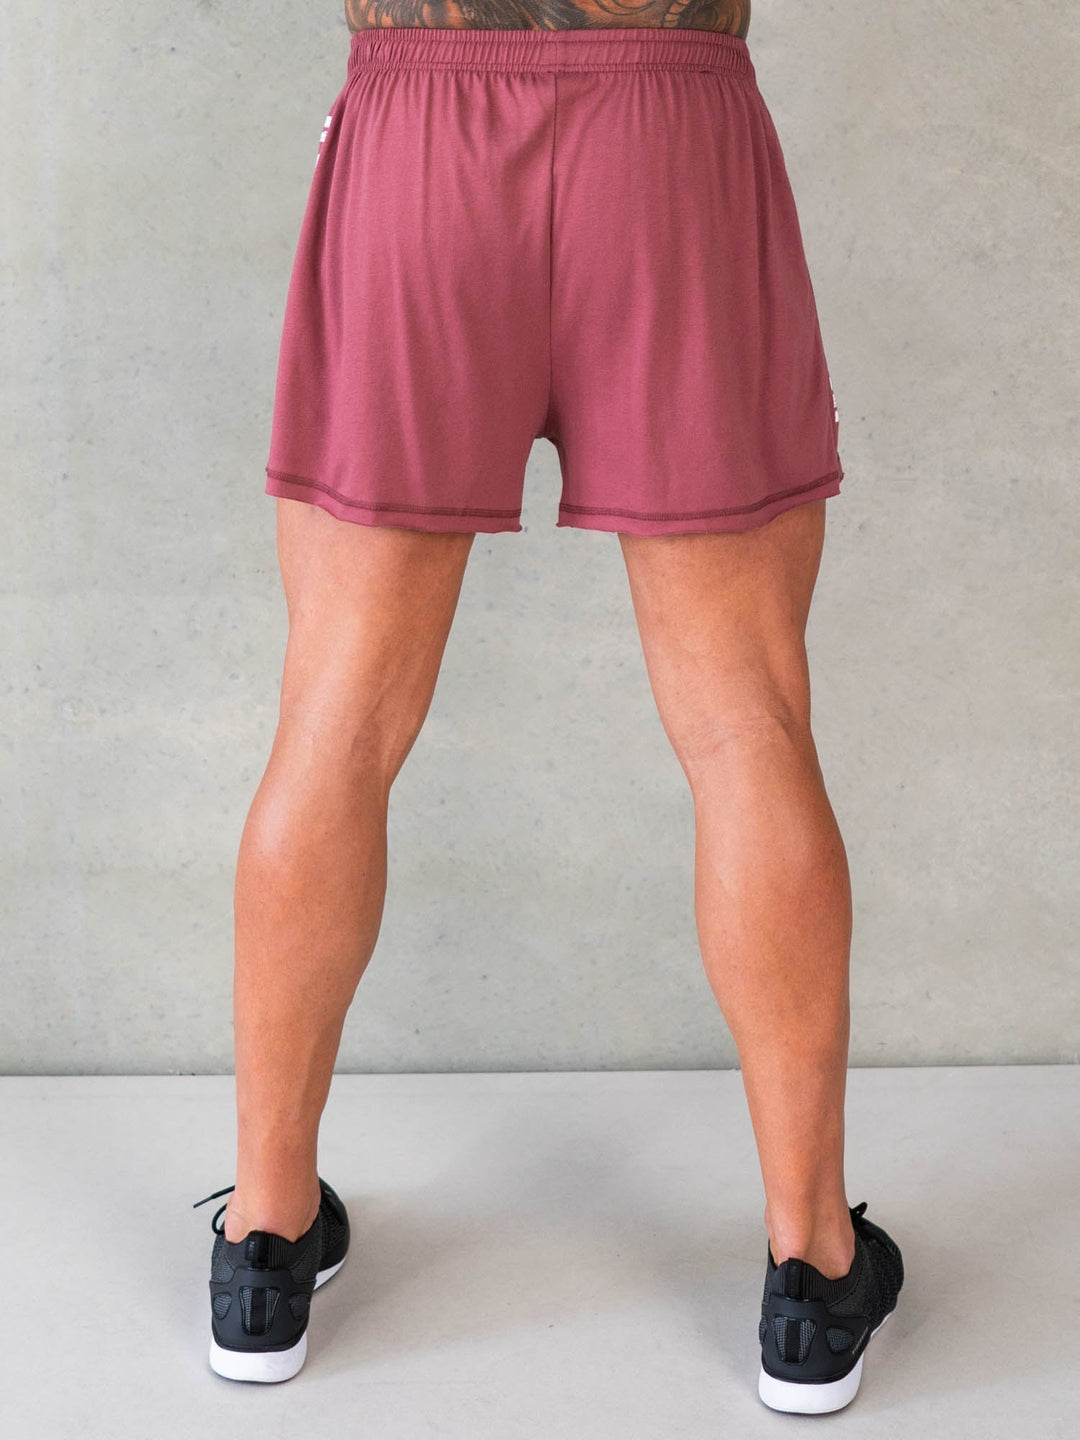 Octane Arnie Shorts - Red Oxide Clothing Ryderwear 